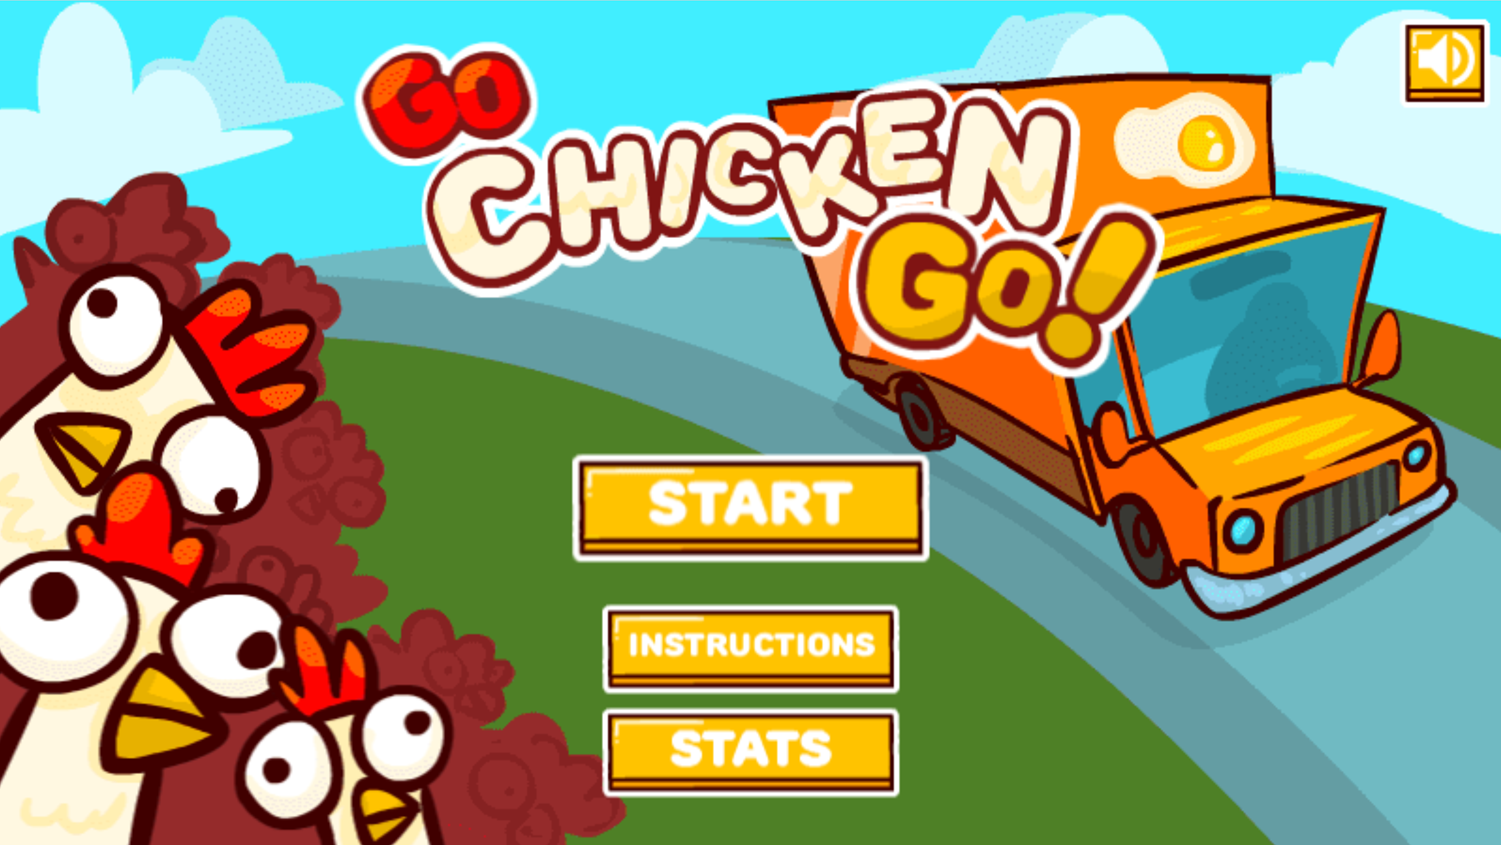 Go Chicken Go Game Welcome Screen Screenshot.